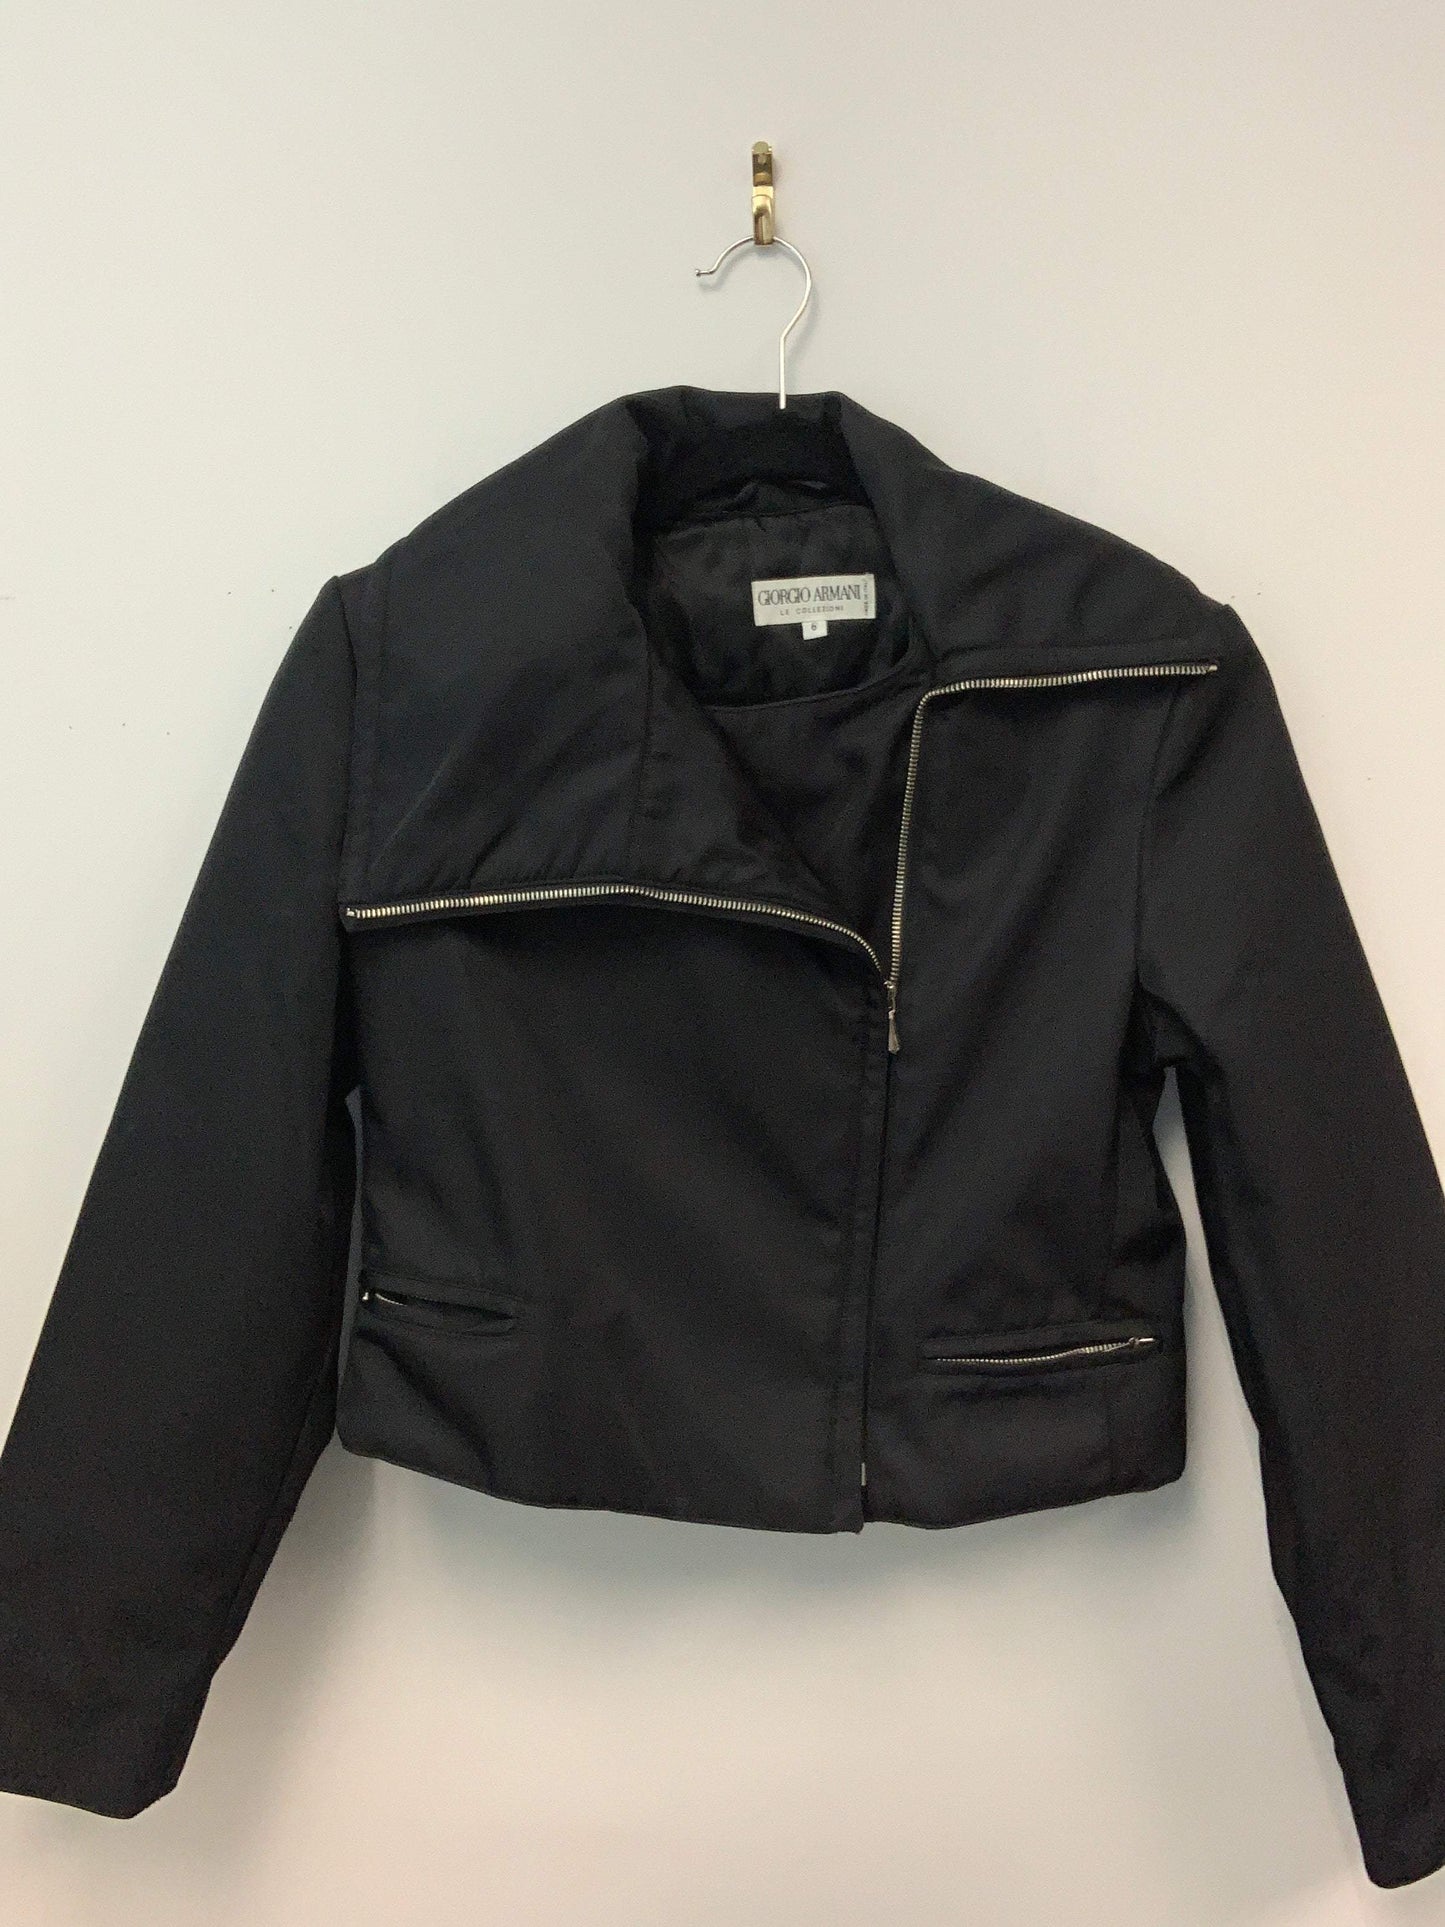 AUTHENTIC Giorgio Armani Size 6 Black Cropped Jacket